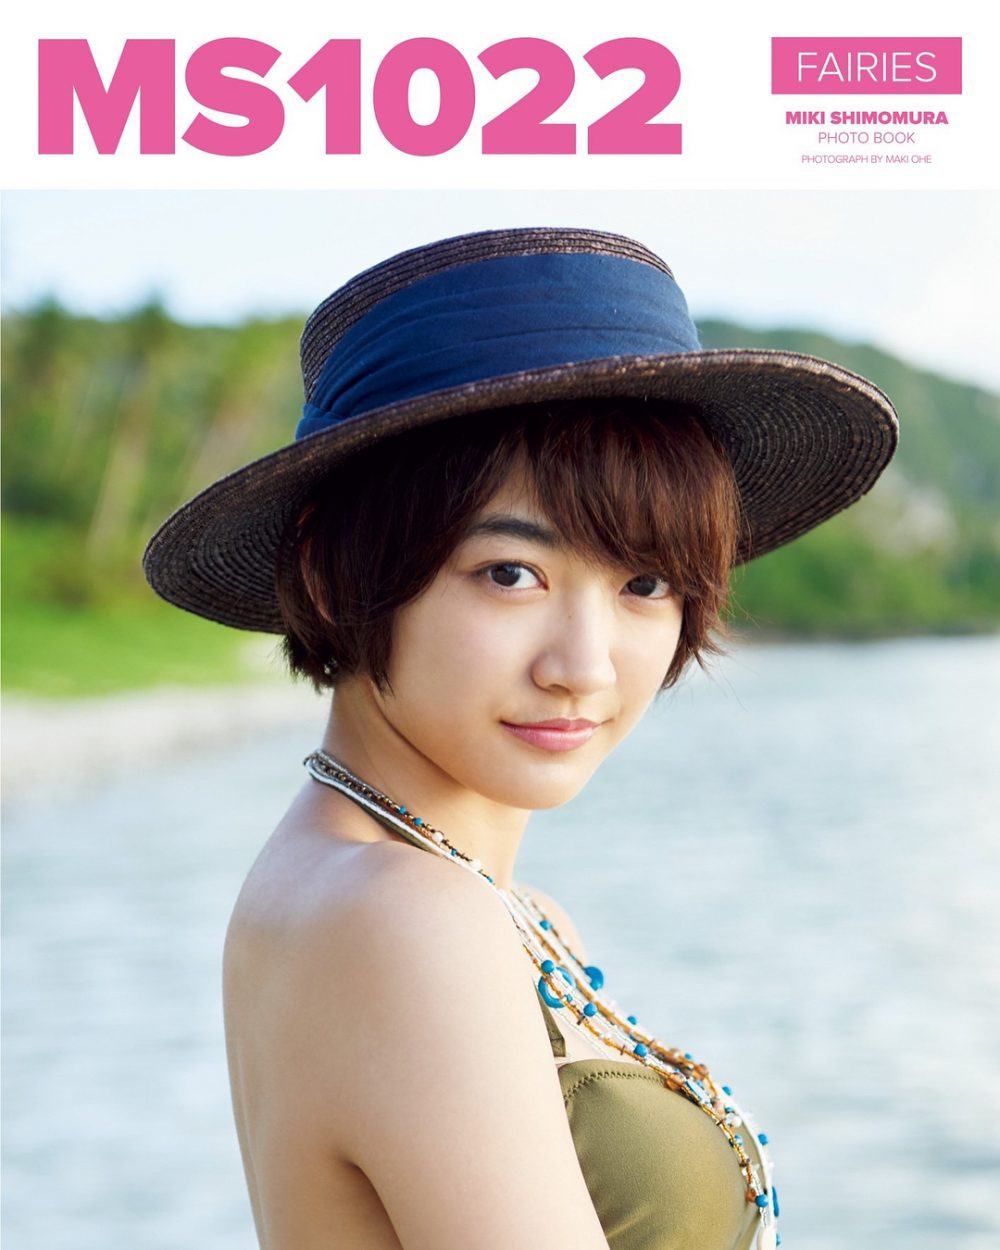 Shimomura Miki - Fairies - MS1022 - photobook_001